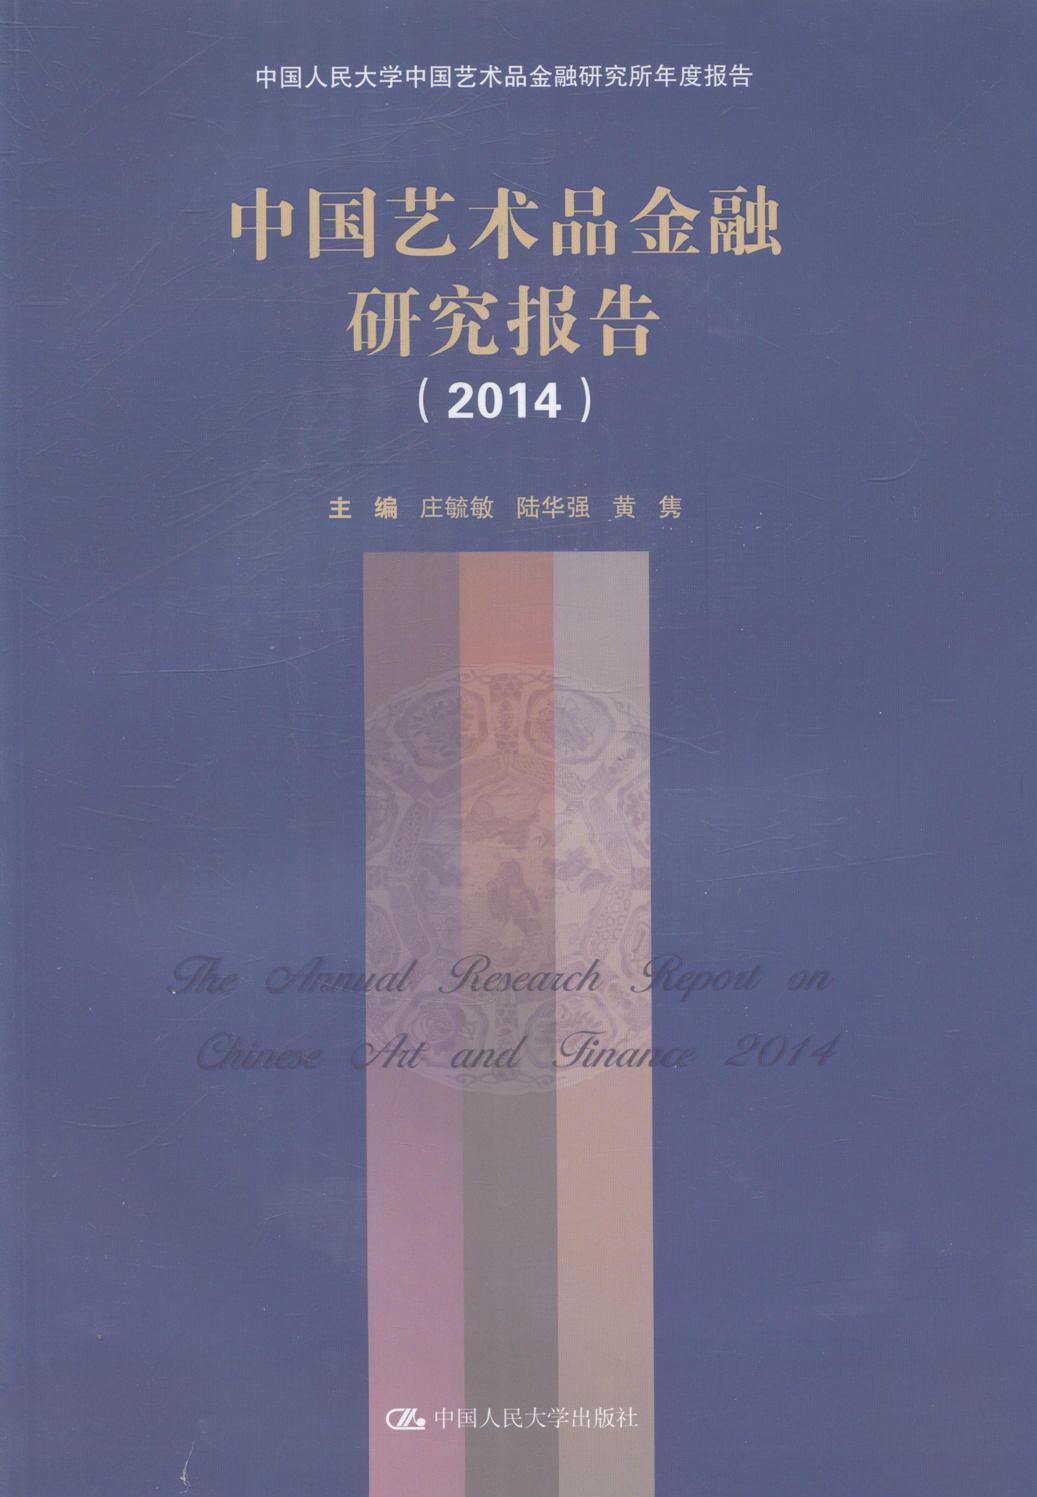 [rt] 中国艺术品金融研究报告:2014  庄毓敏  中国人民大学出版社  经济  艺术品金融市场研究报告中国